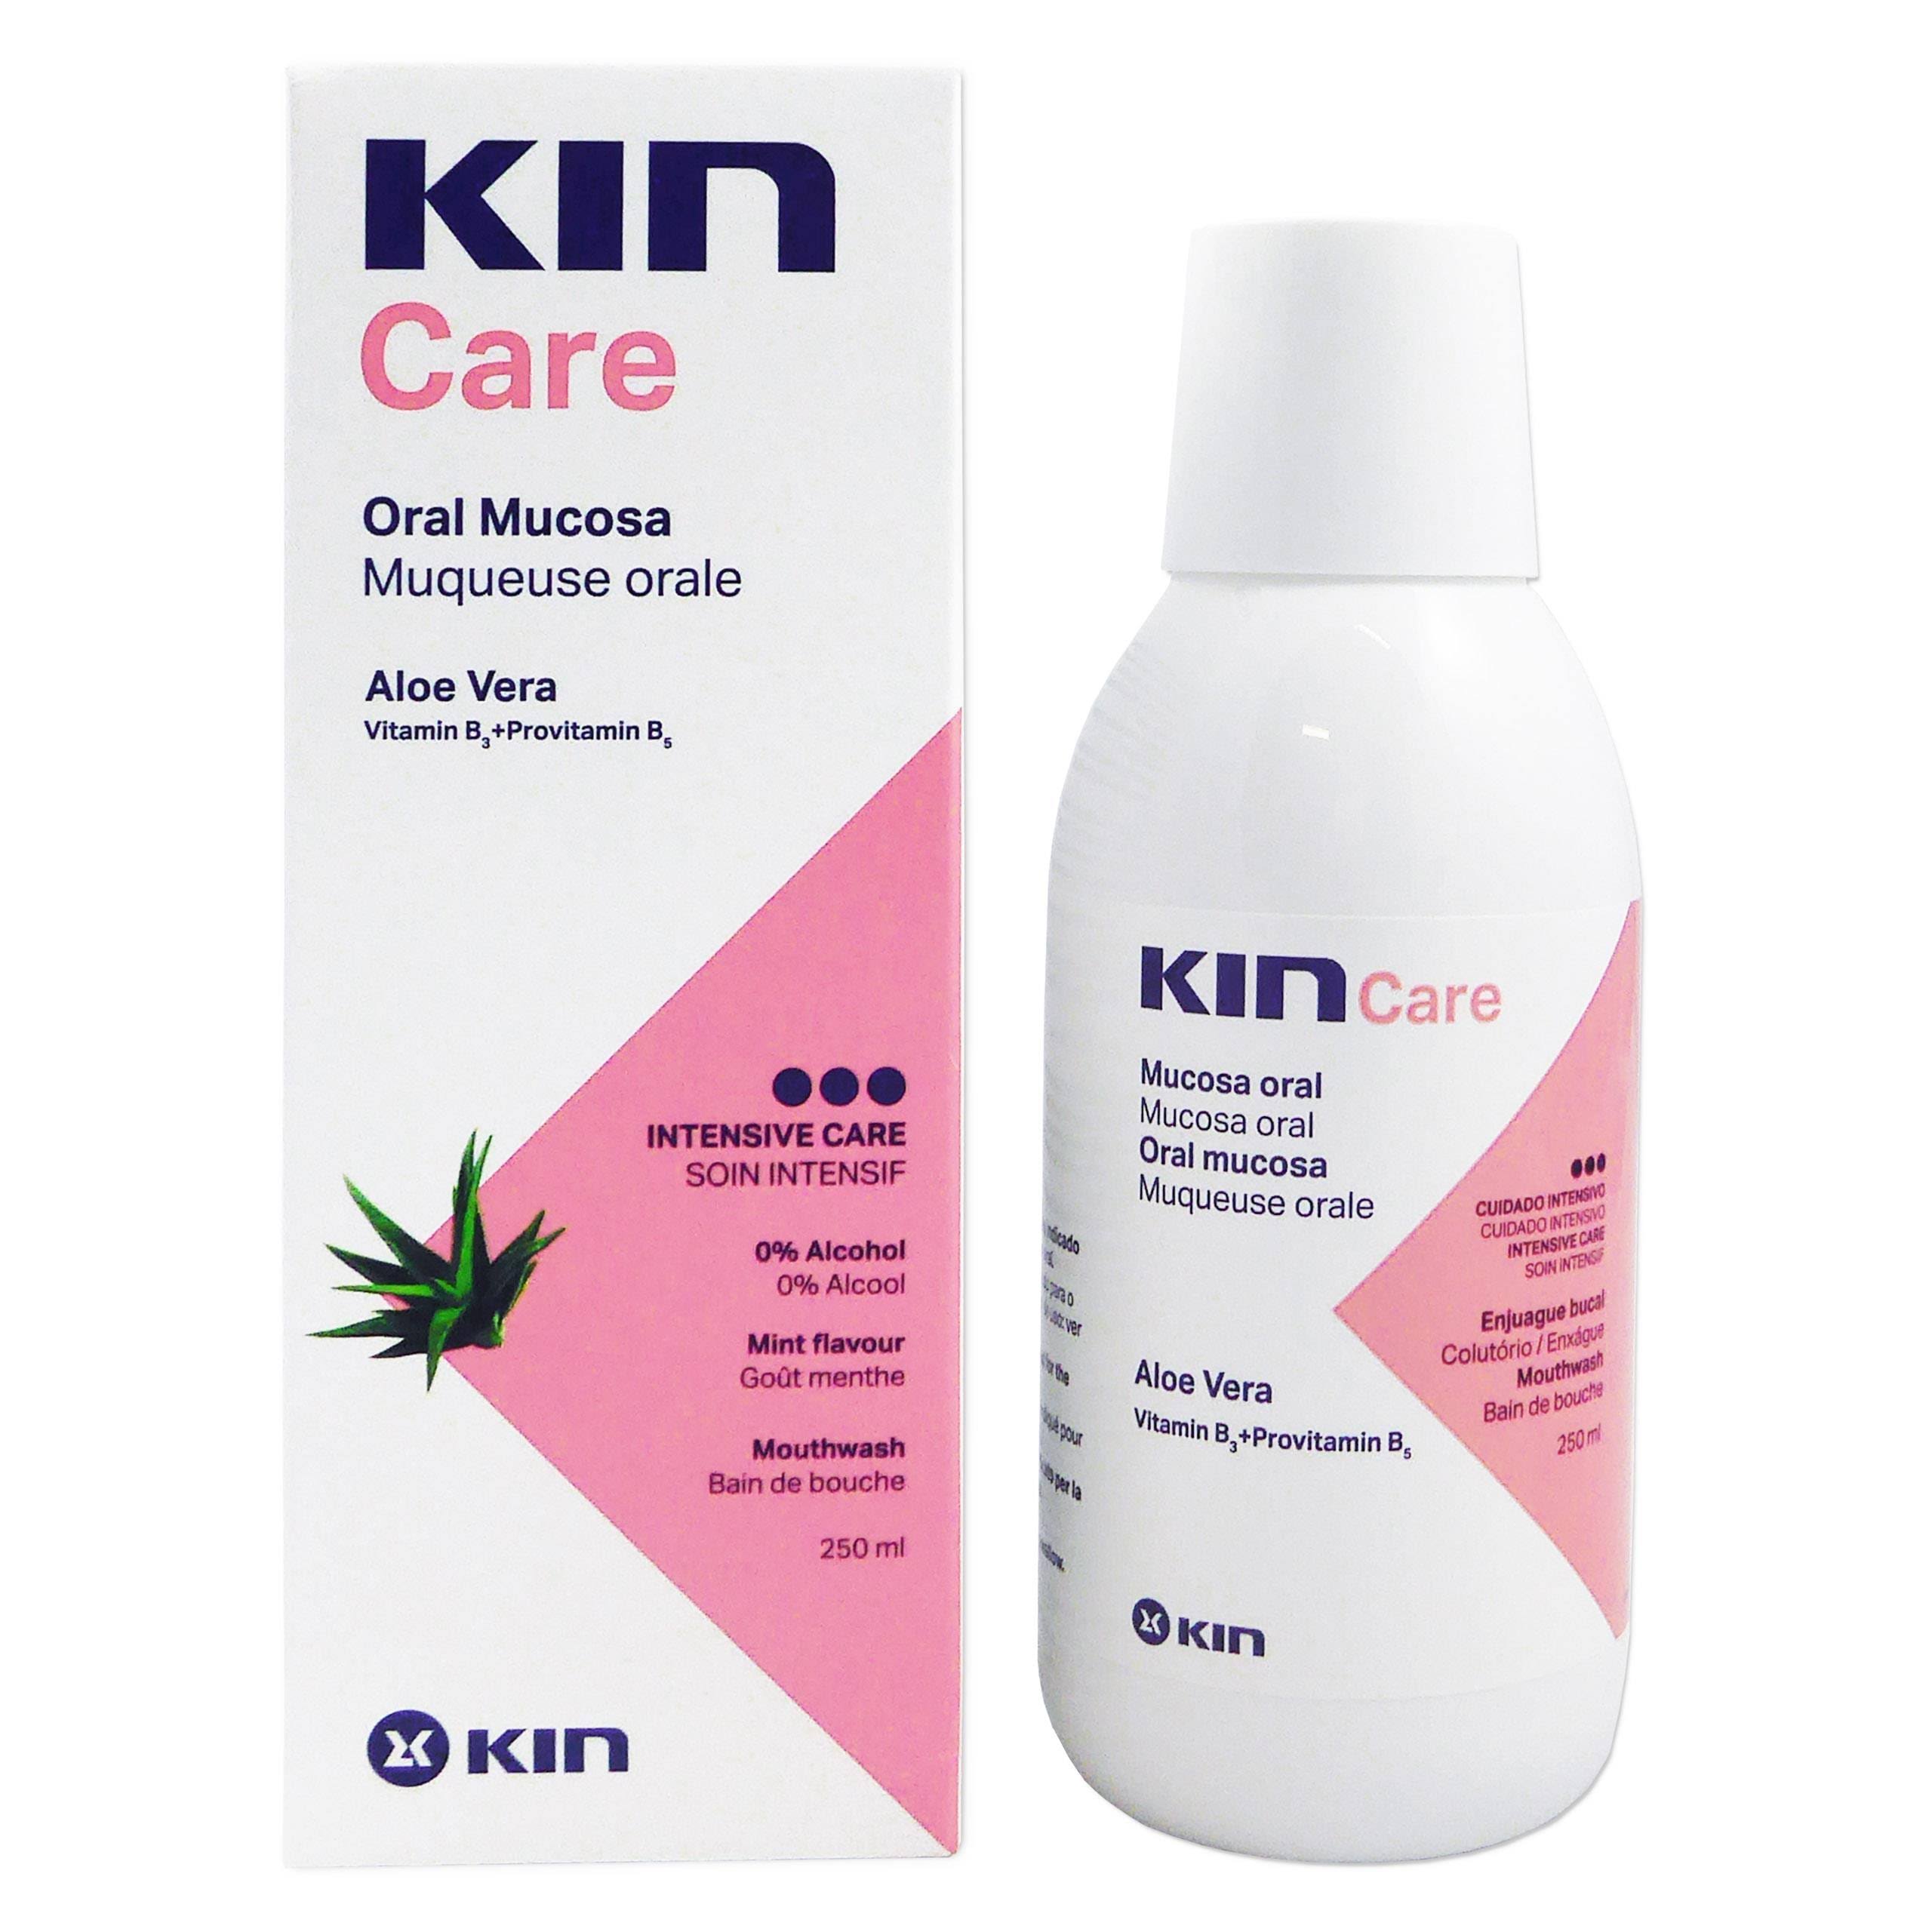 Kin Care Mouthwash with Aloe Vera - 250ml